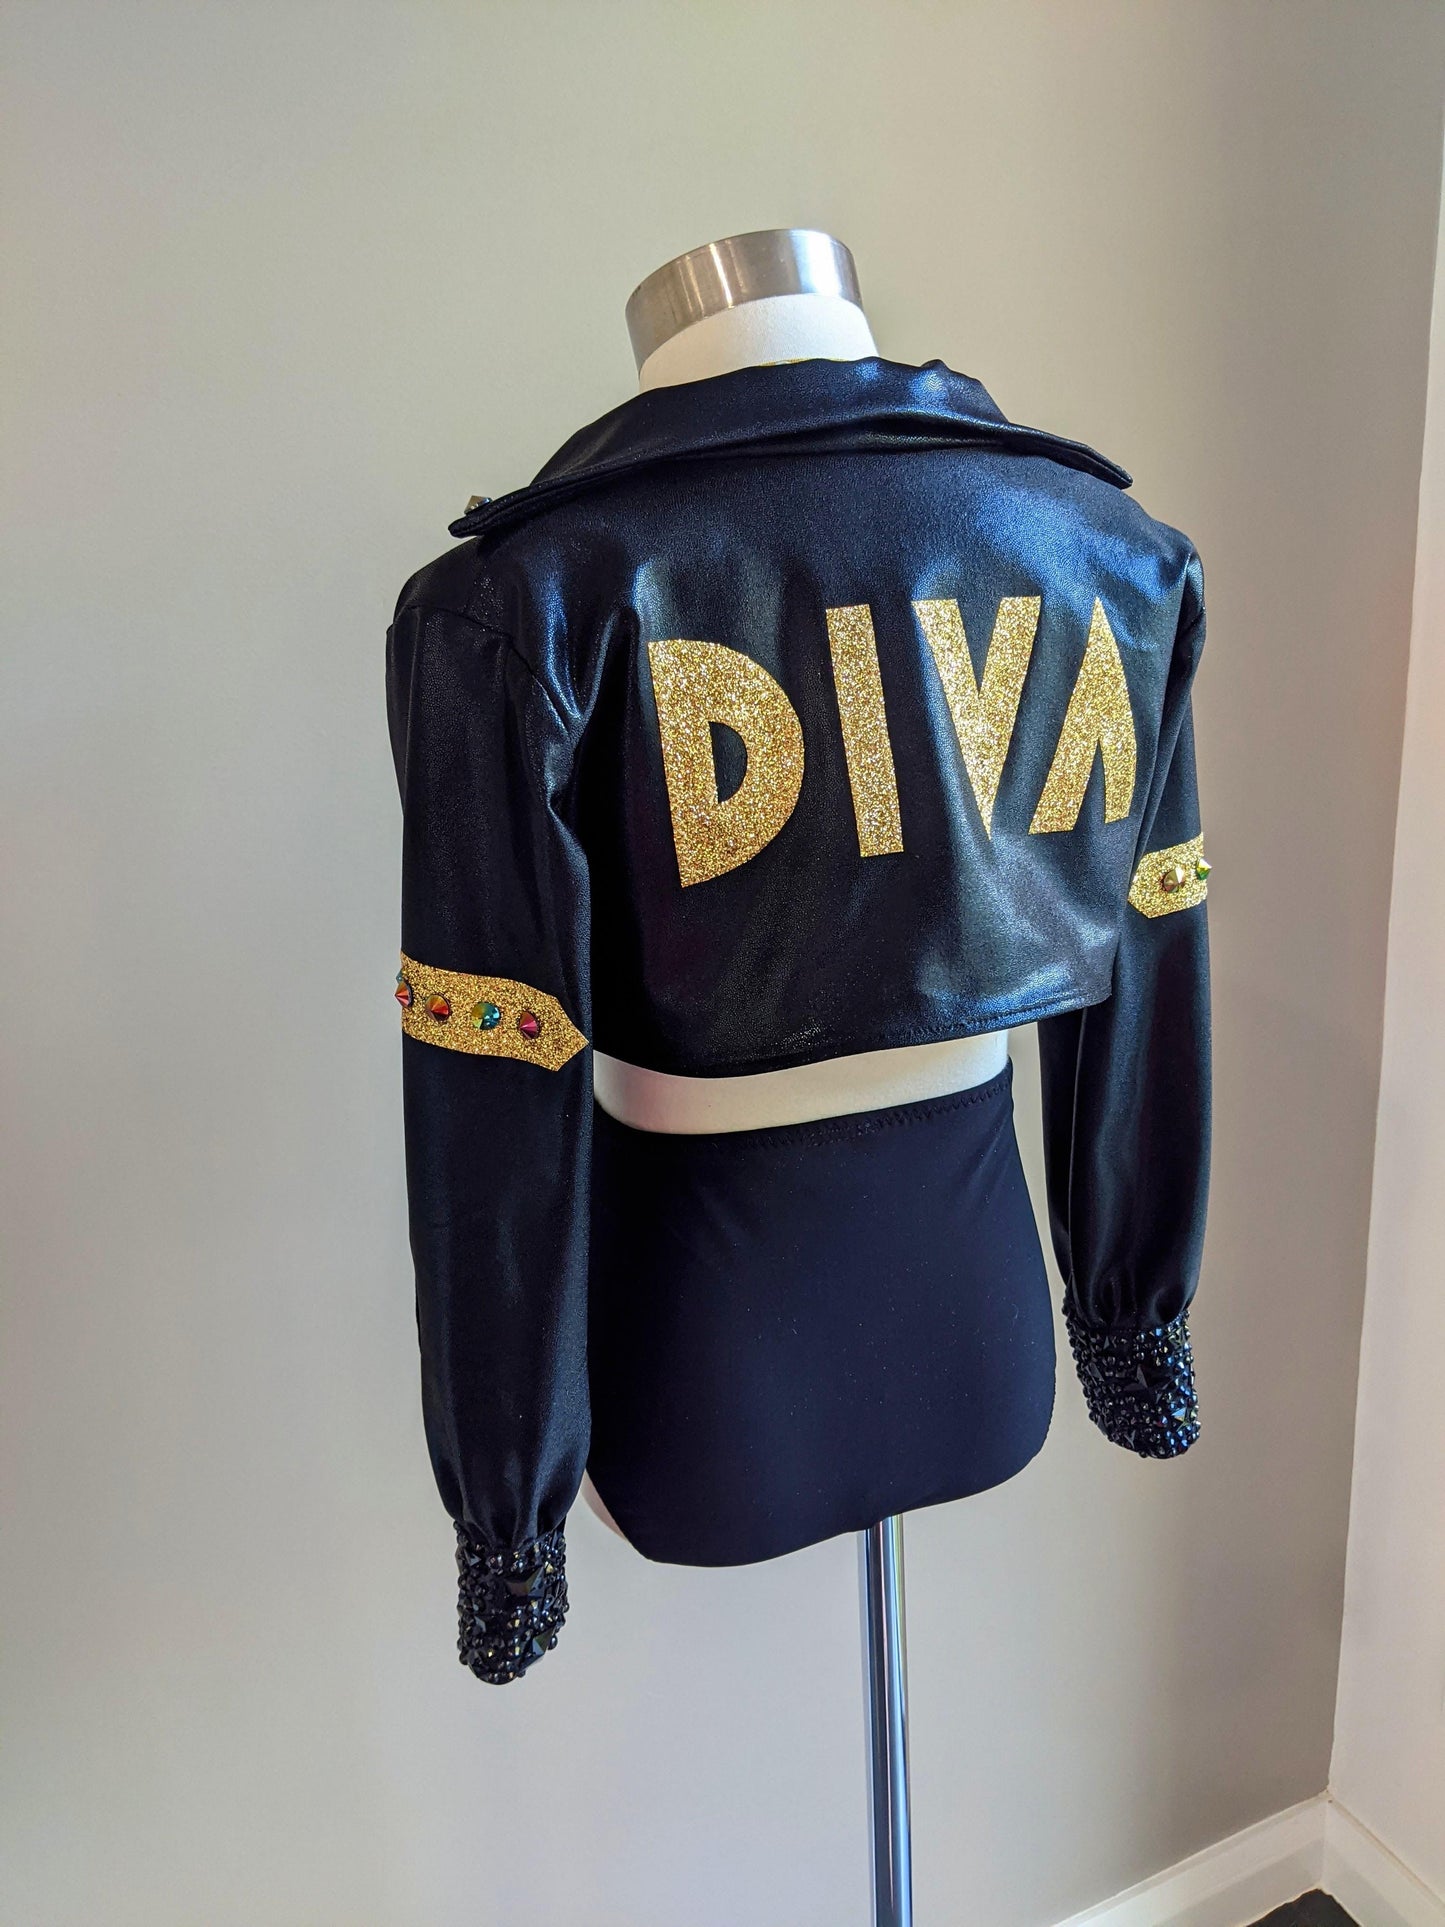 Diva | 6-8yrs - Dazzle Me Dancewear